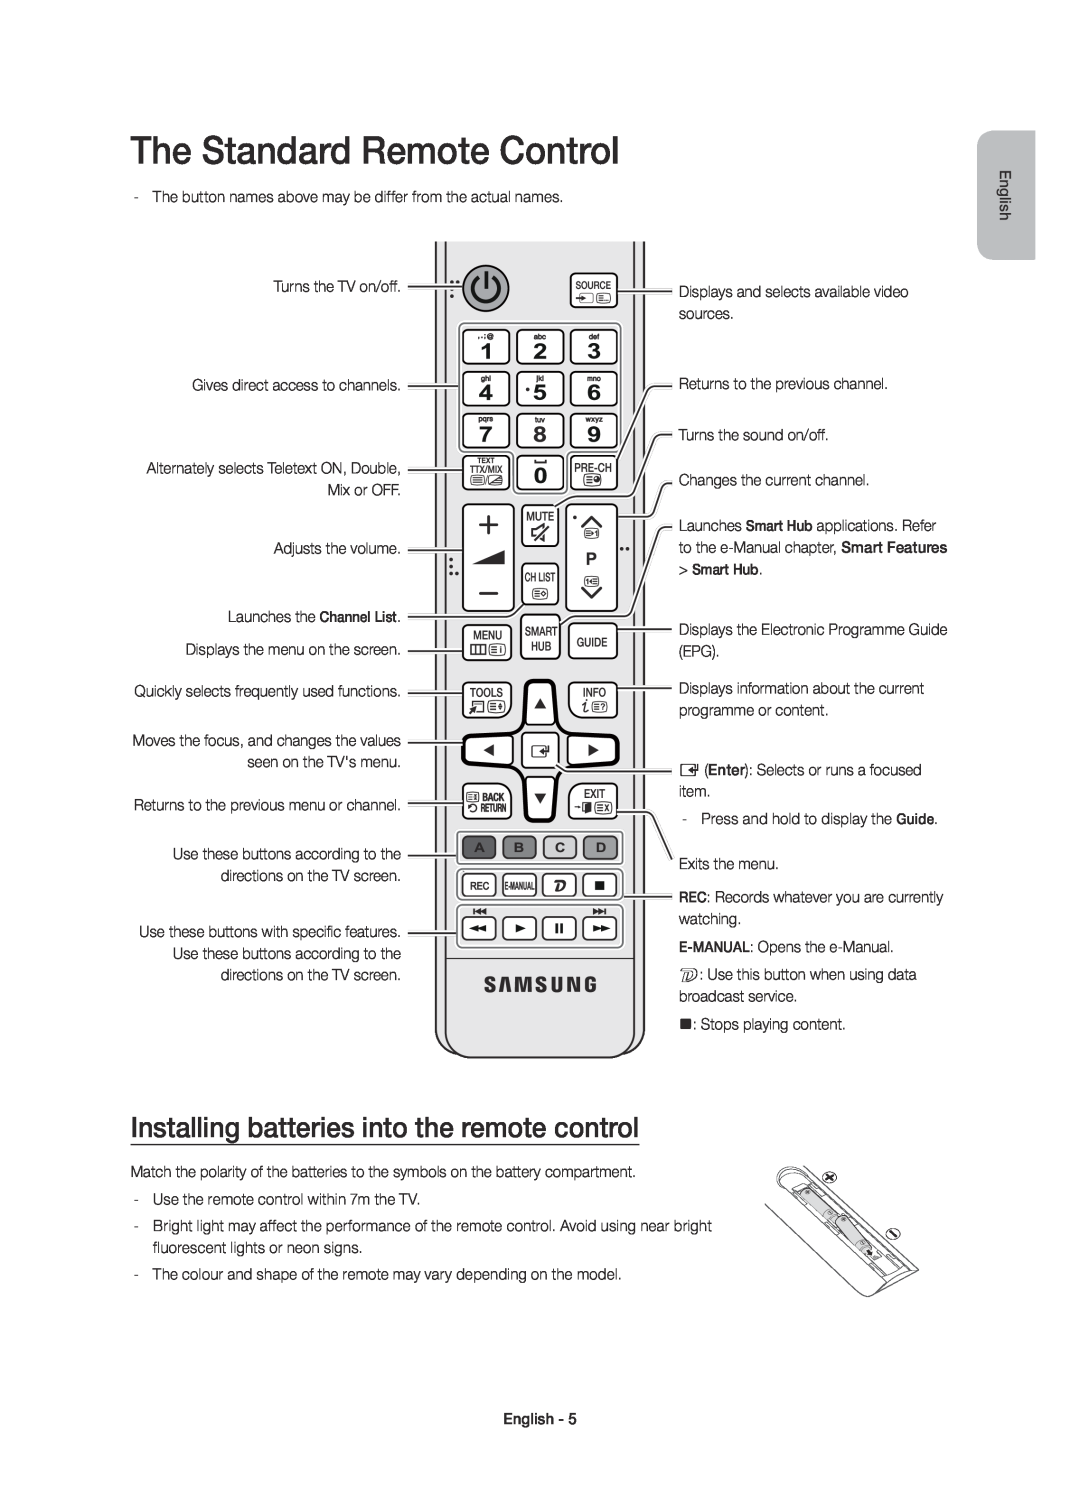 Samsung UE55JU7500TXZT, UE48JU7500TXXC manual The Standard Remote Control, Installing batteries into the remote control 